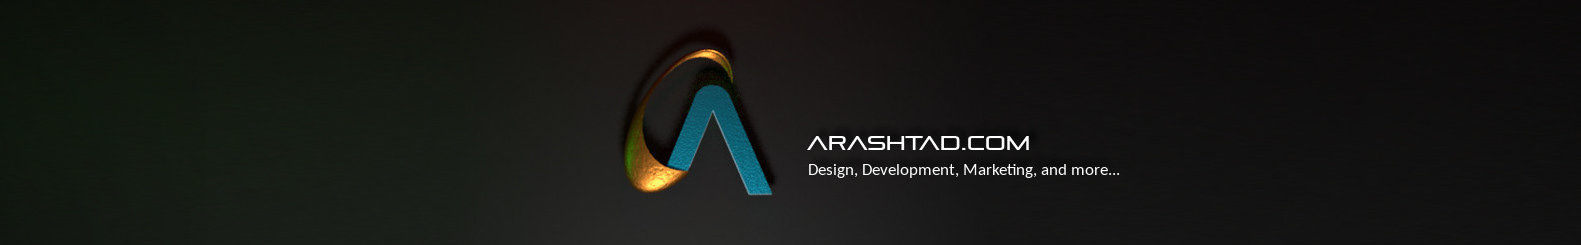 Arashtad LLC's profile banner